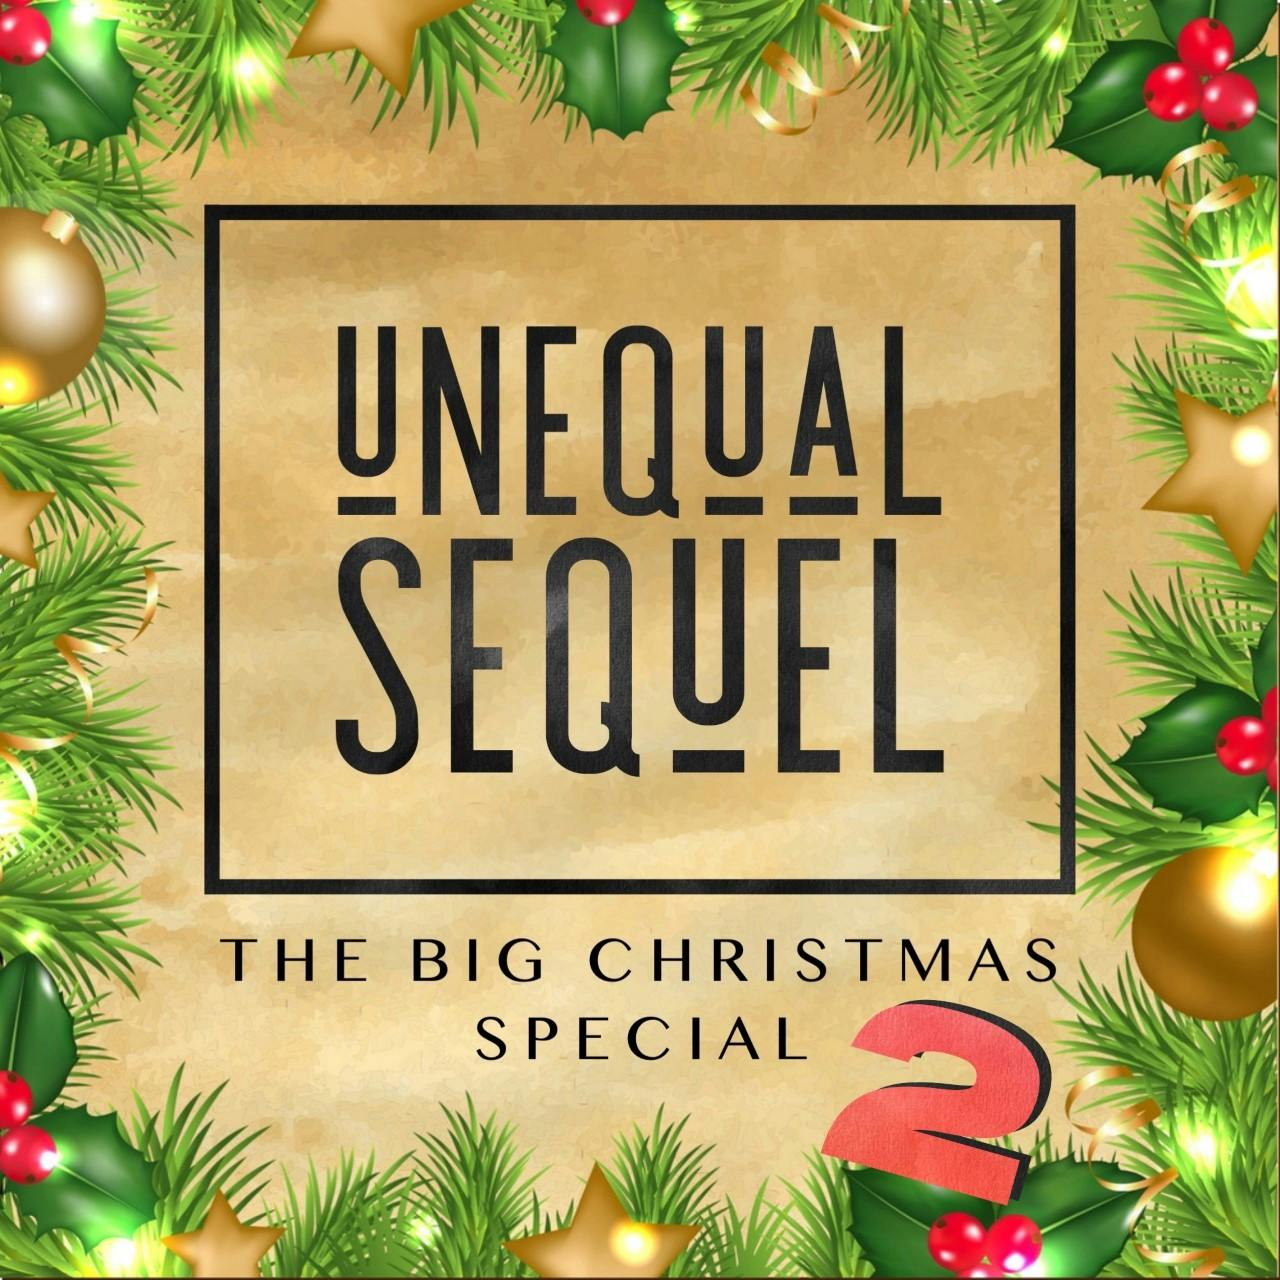 The Big Christmas Special 2